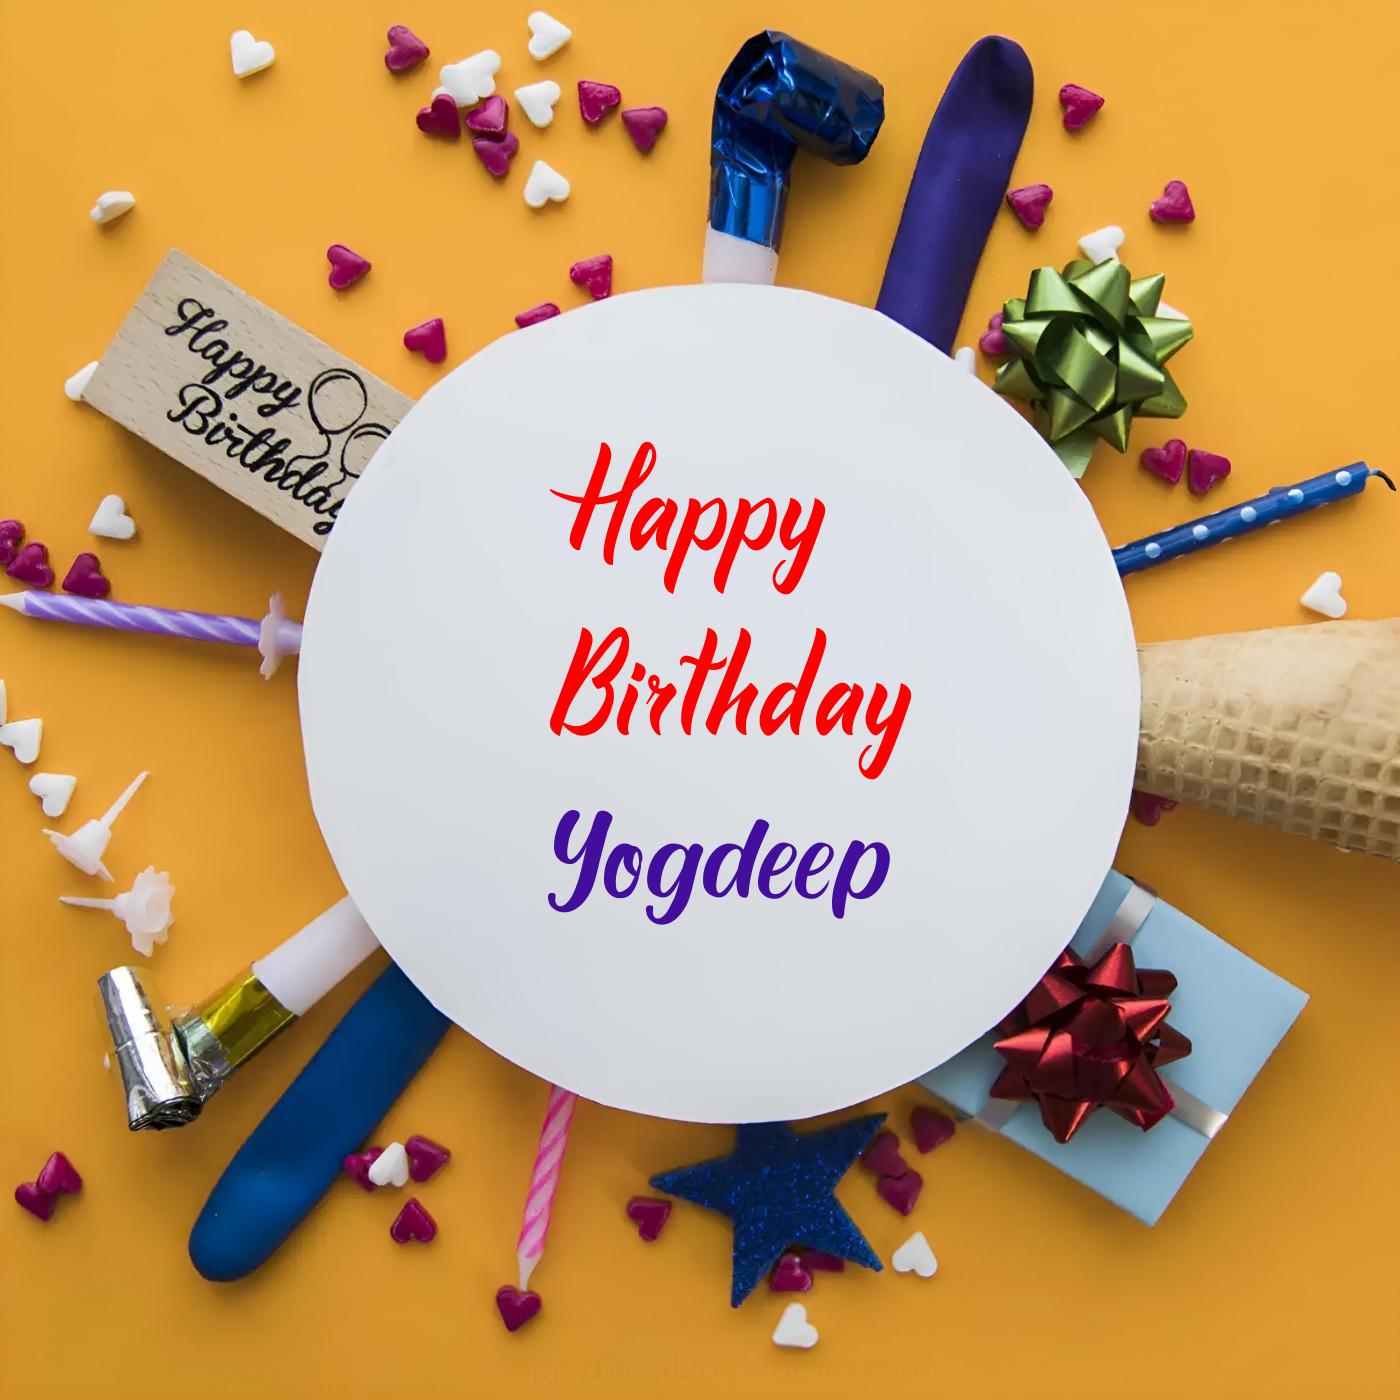 Happy Birthday Yogdeep Round Frame Card